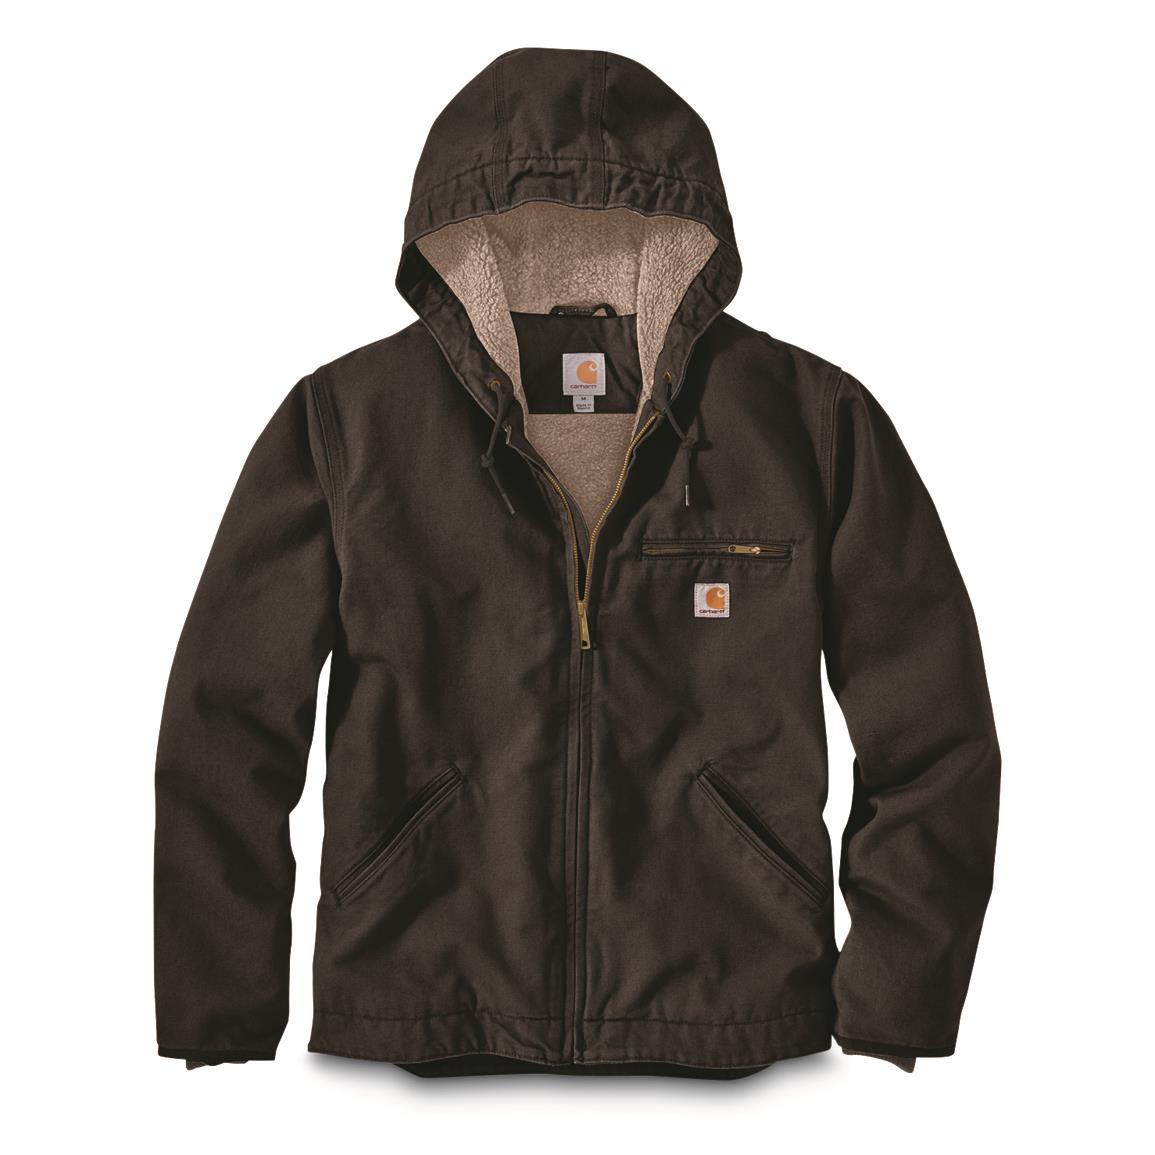 Carhartt Men's Washed Duck Sherpa-lined Jacket, Dark Brown